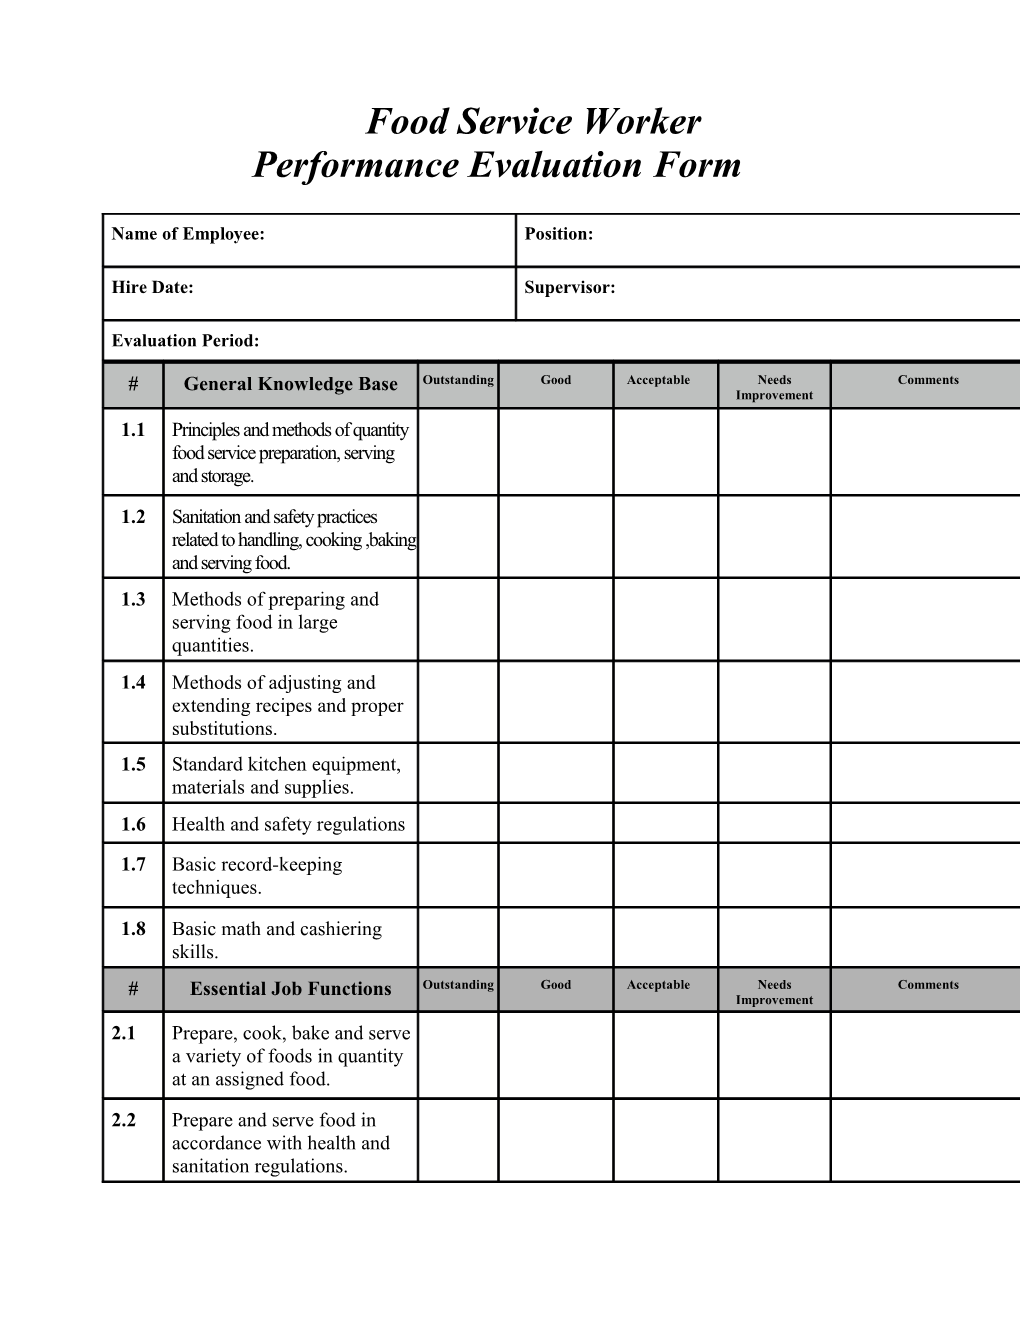 Food Service Workerperformance Evaluation Form